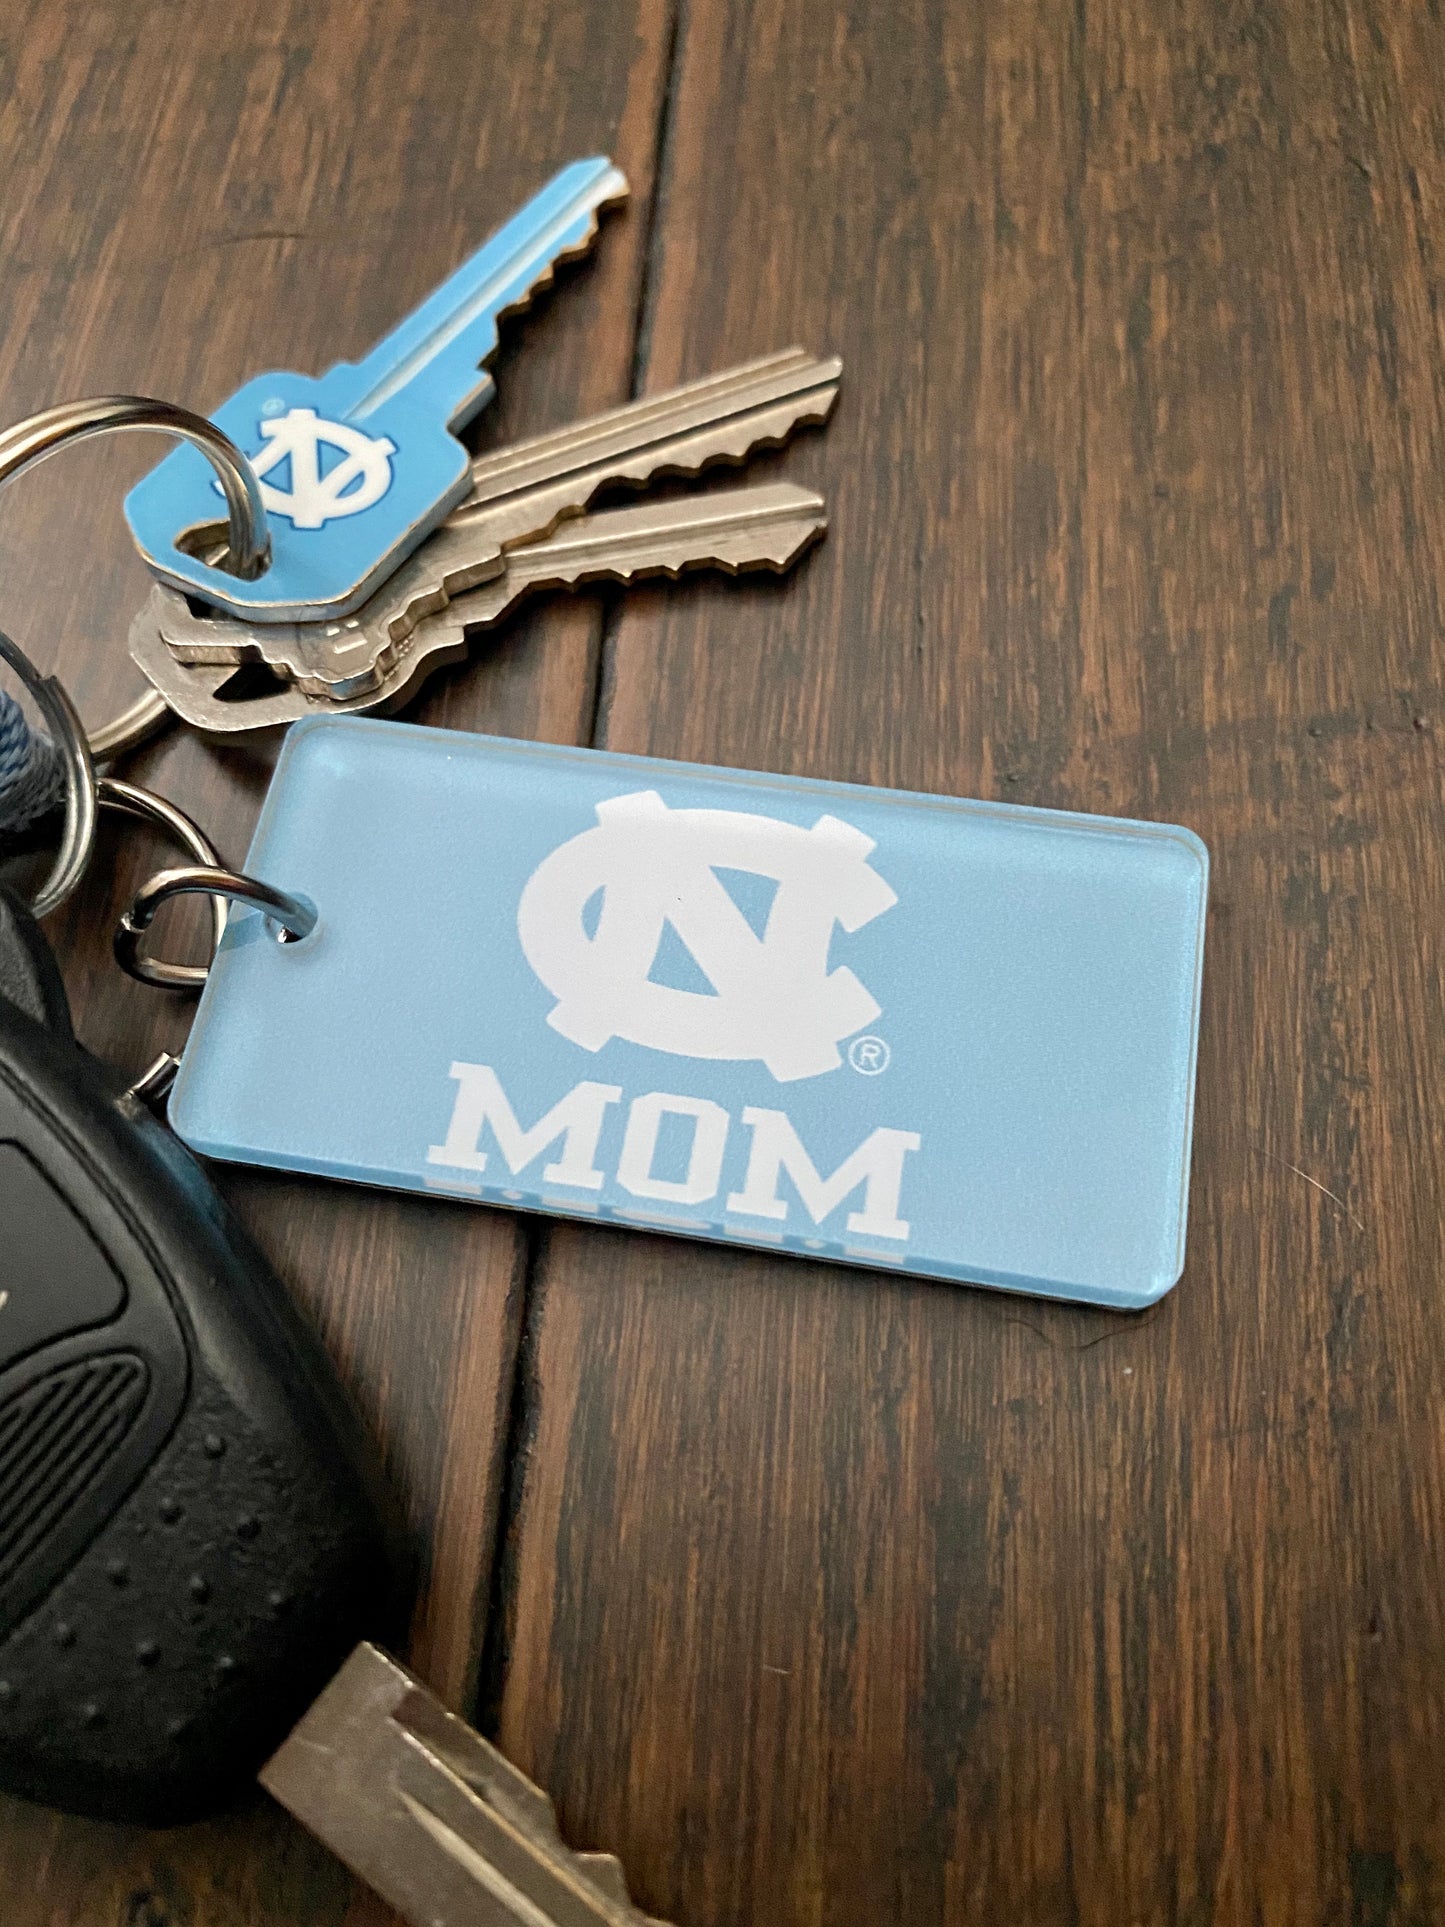 UNC Mom Keychain Rectangle Key Ring Carolina Mom by Wincraft